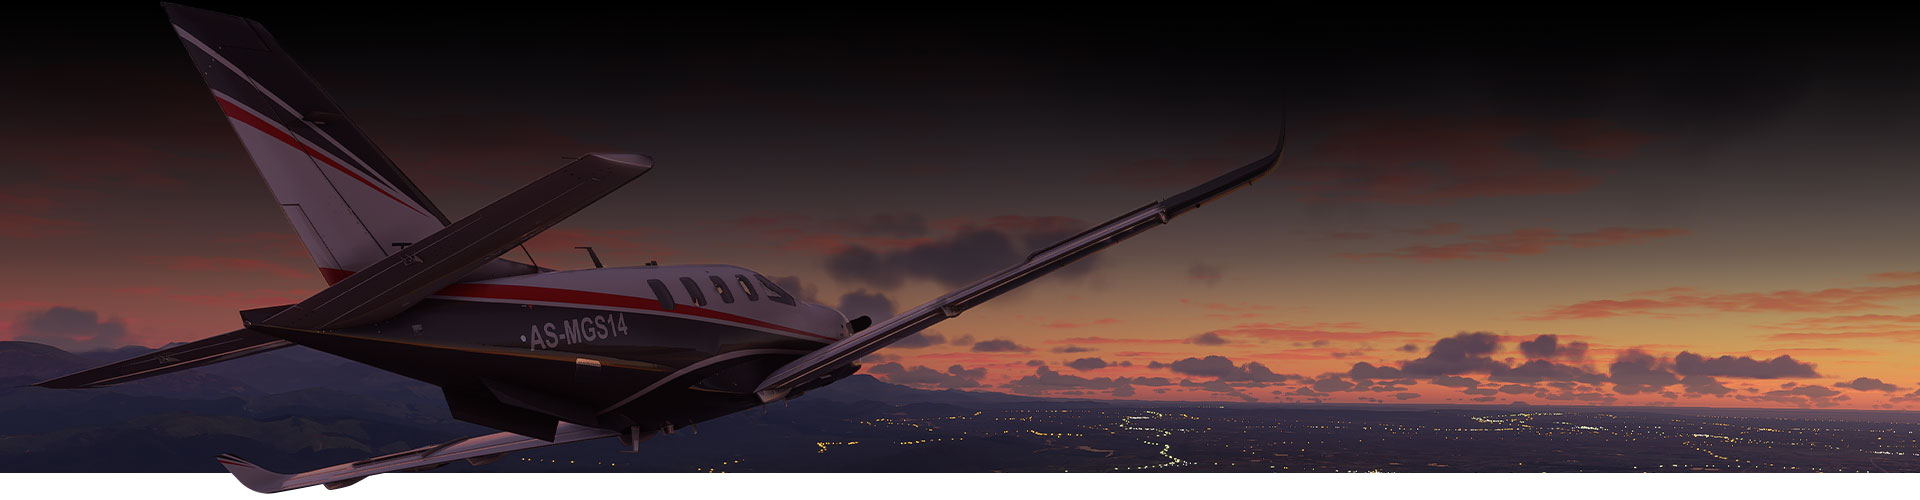 Самолет из Microsoft Flight Simulato летит над городом на закате